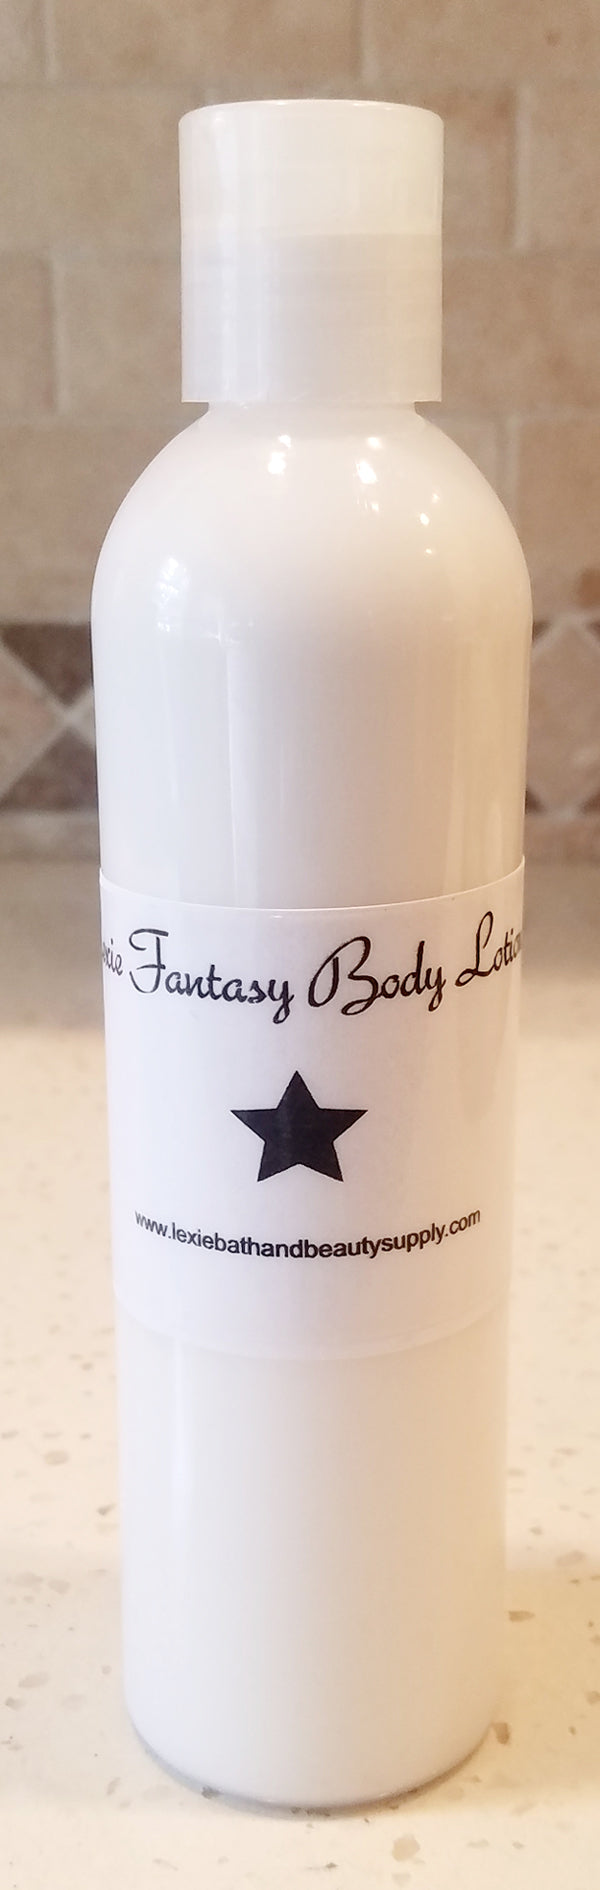 Lexie Fantasy Body Lotion - Lexie Bath and Beauty Supply